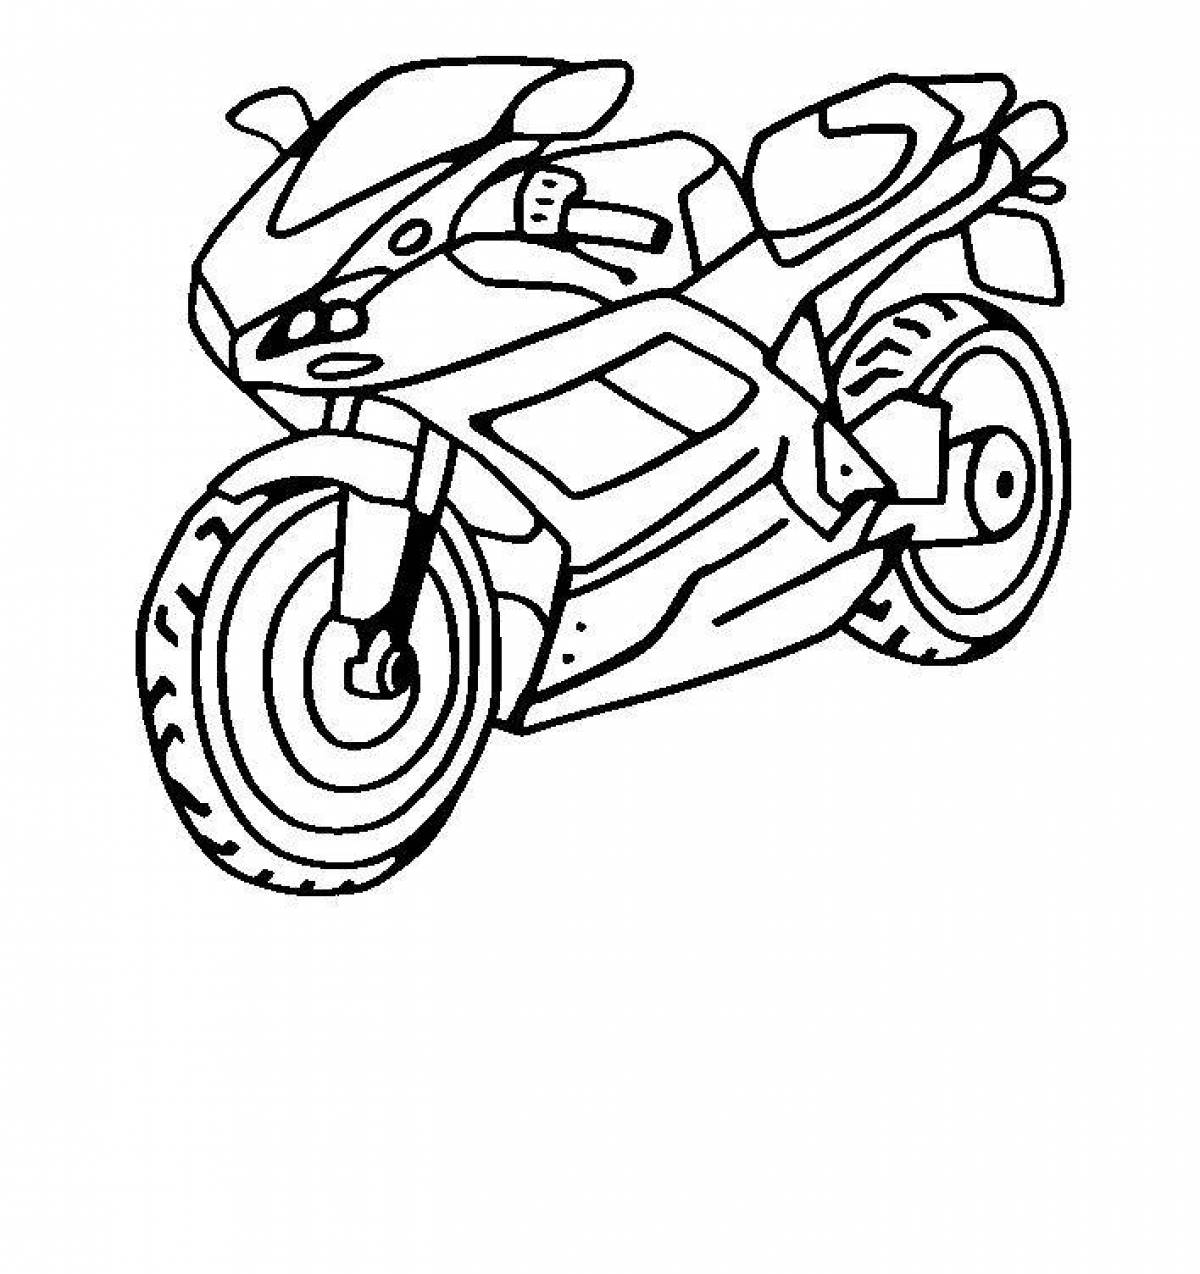 Раскраска мотоцикл Ducati